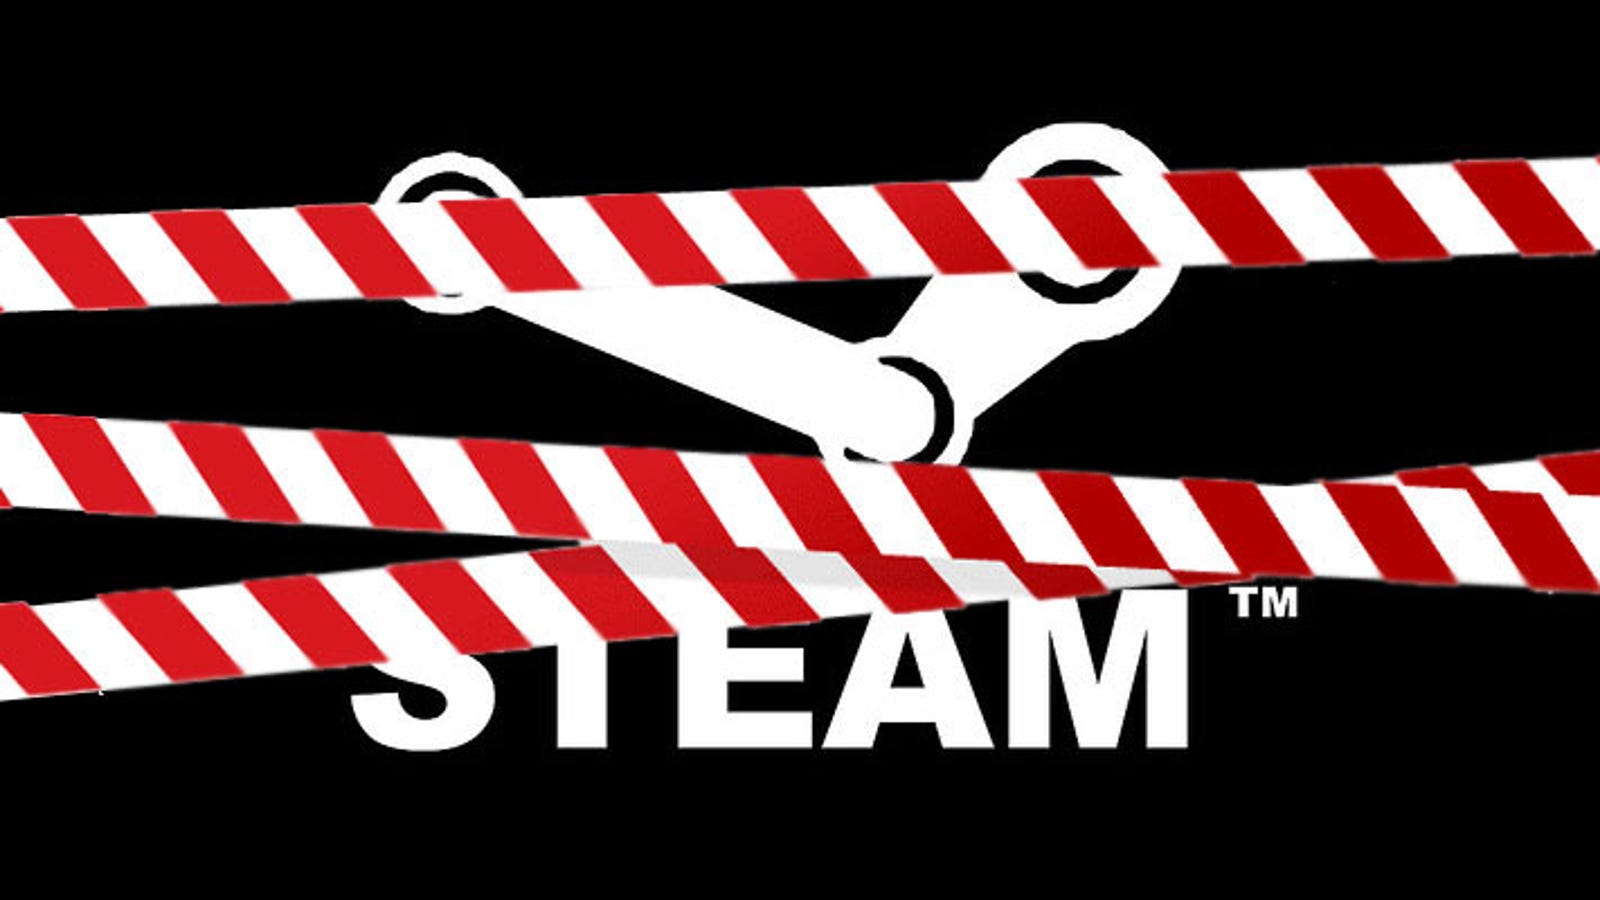 Steam status is down фото 89